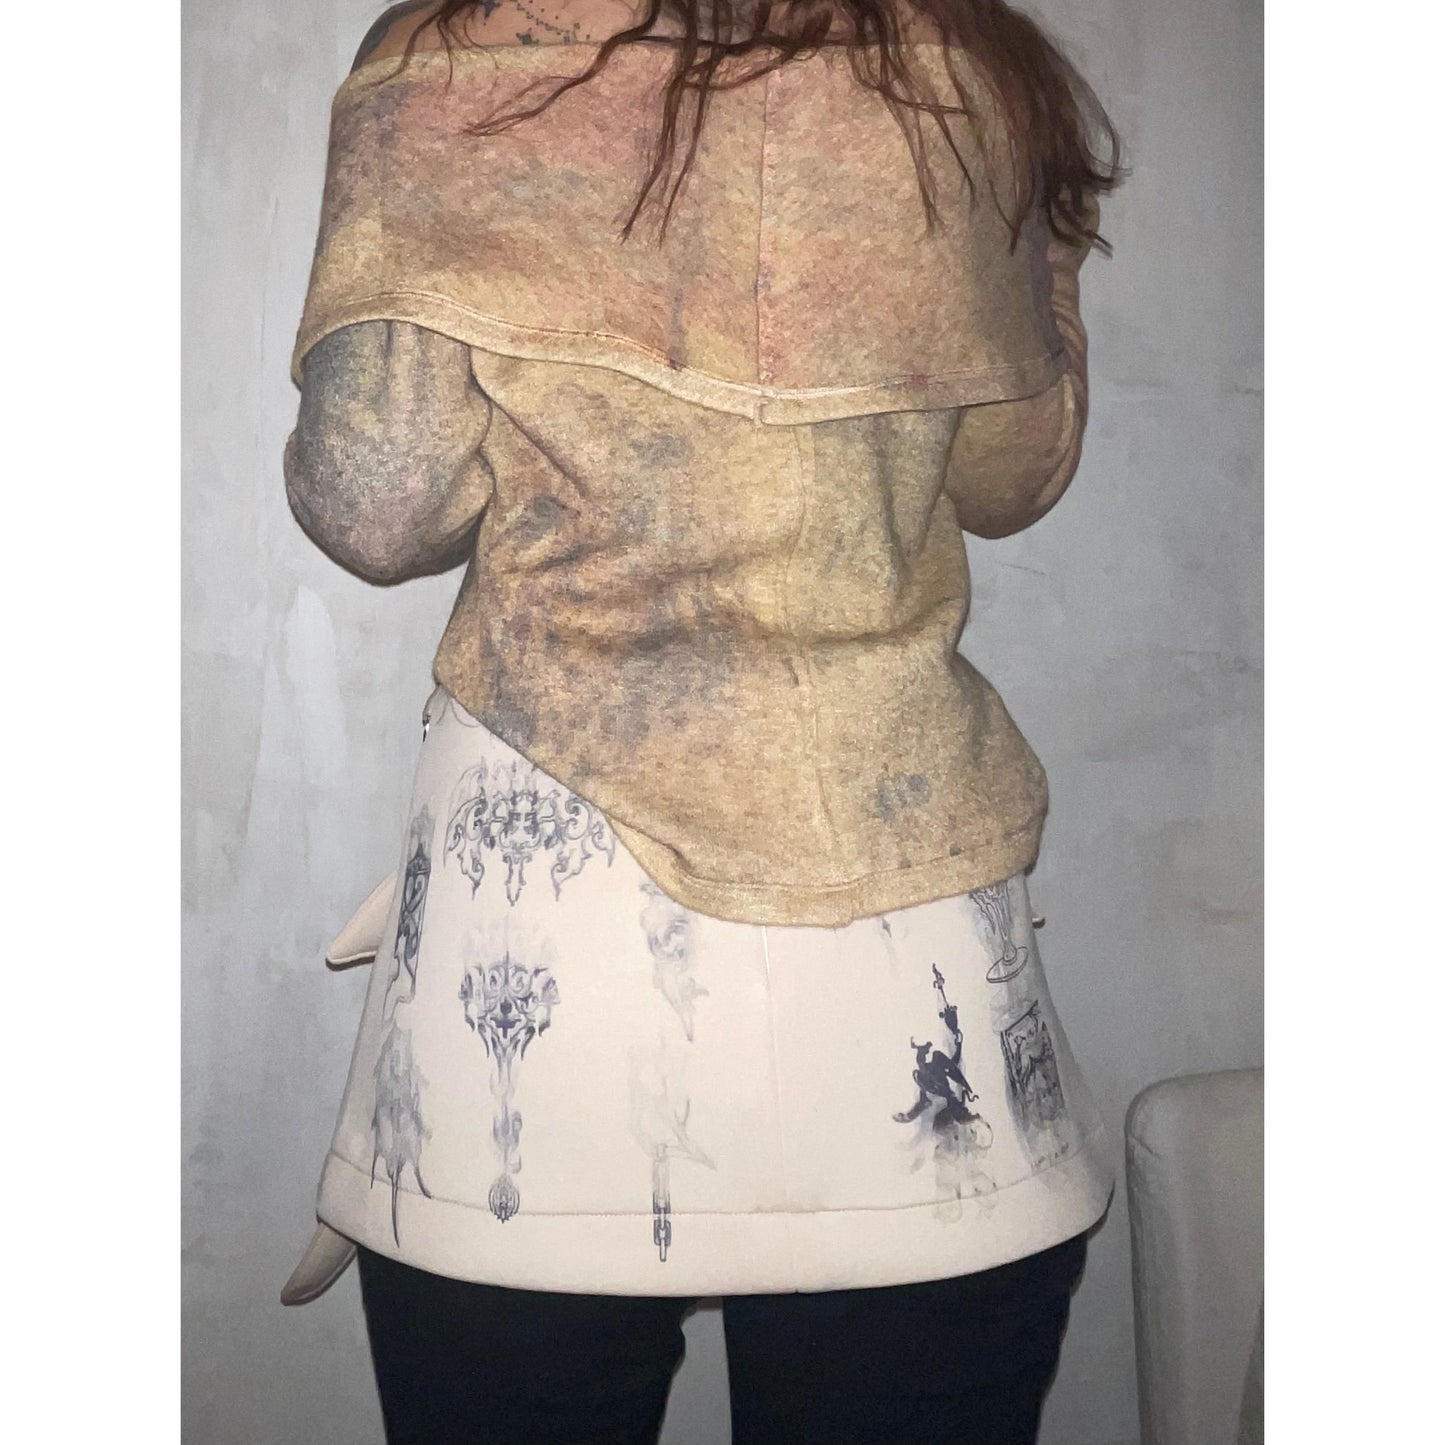 ambrose skirt